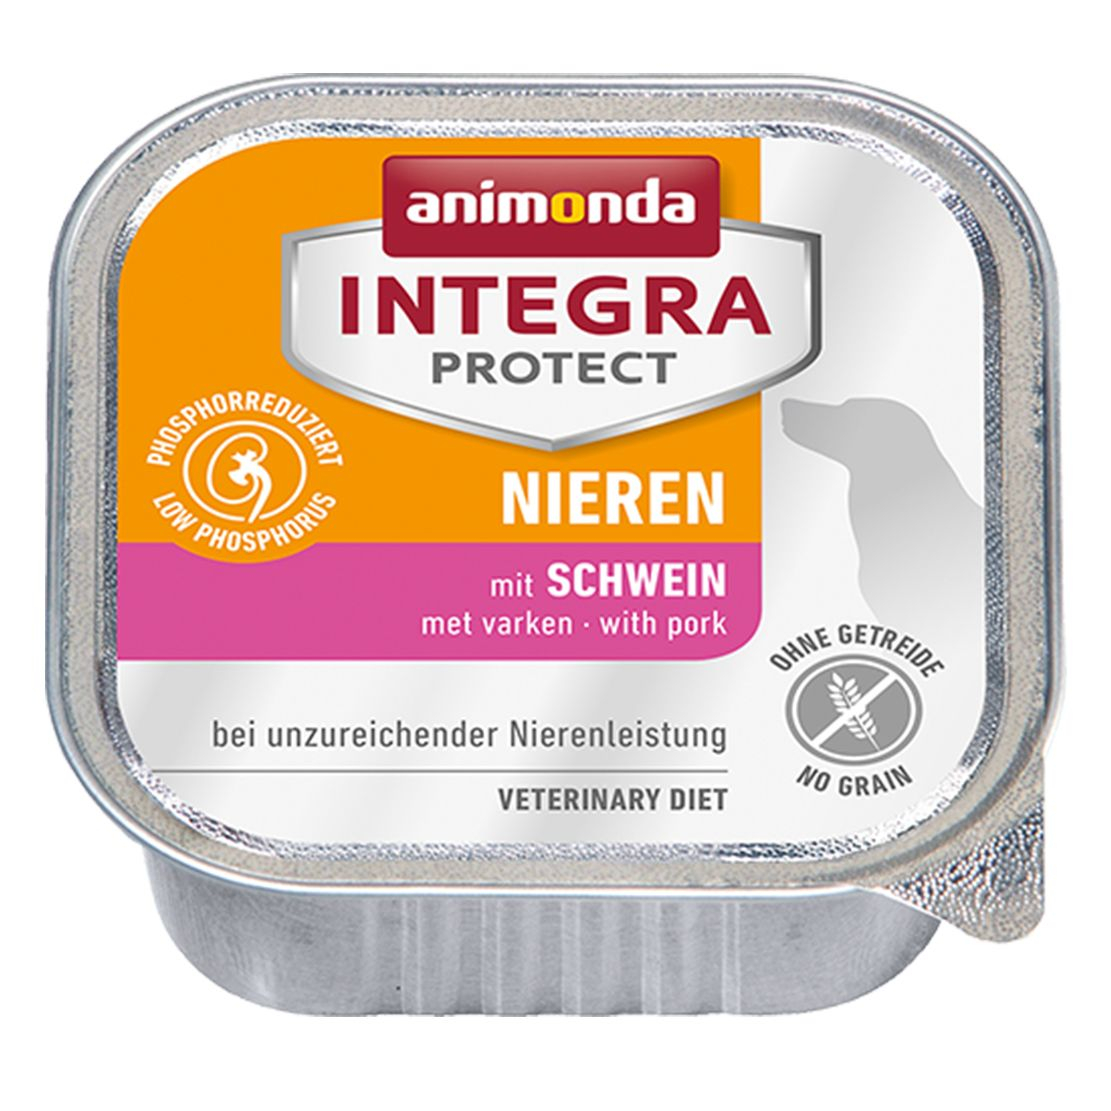 Animonda INTEGRA Protect Nieren Vese 150 g